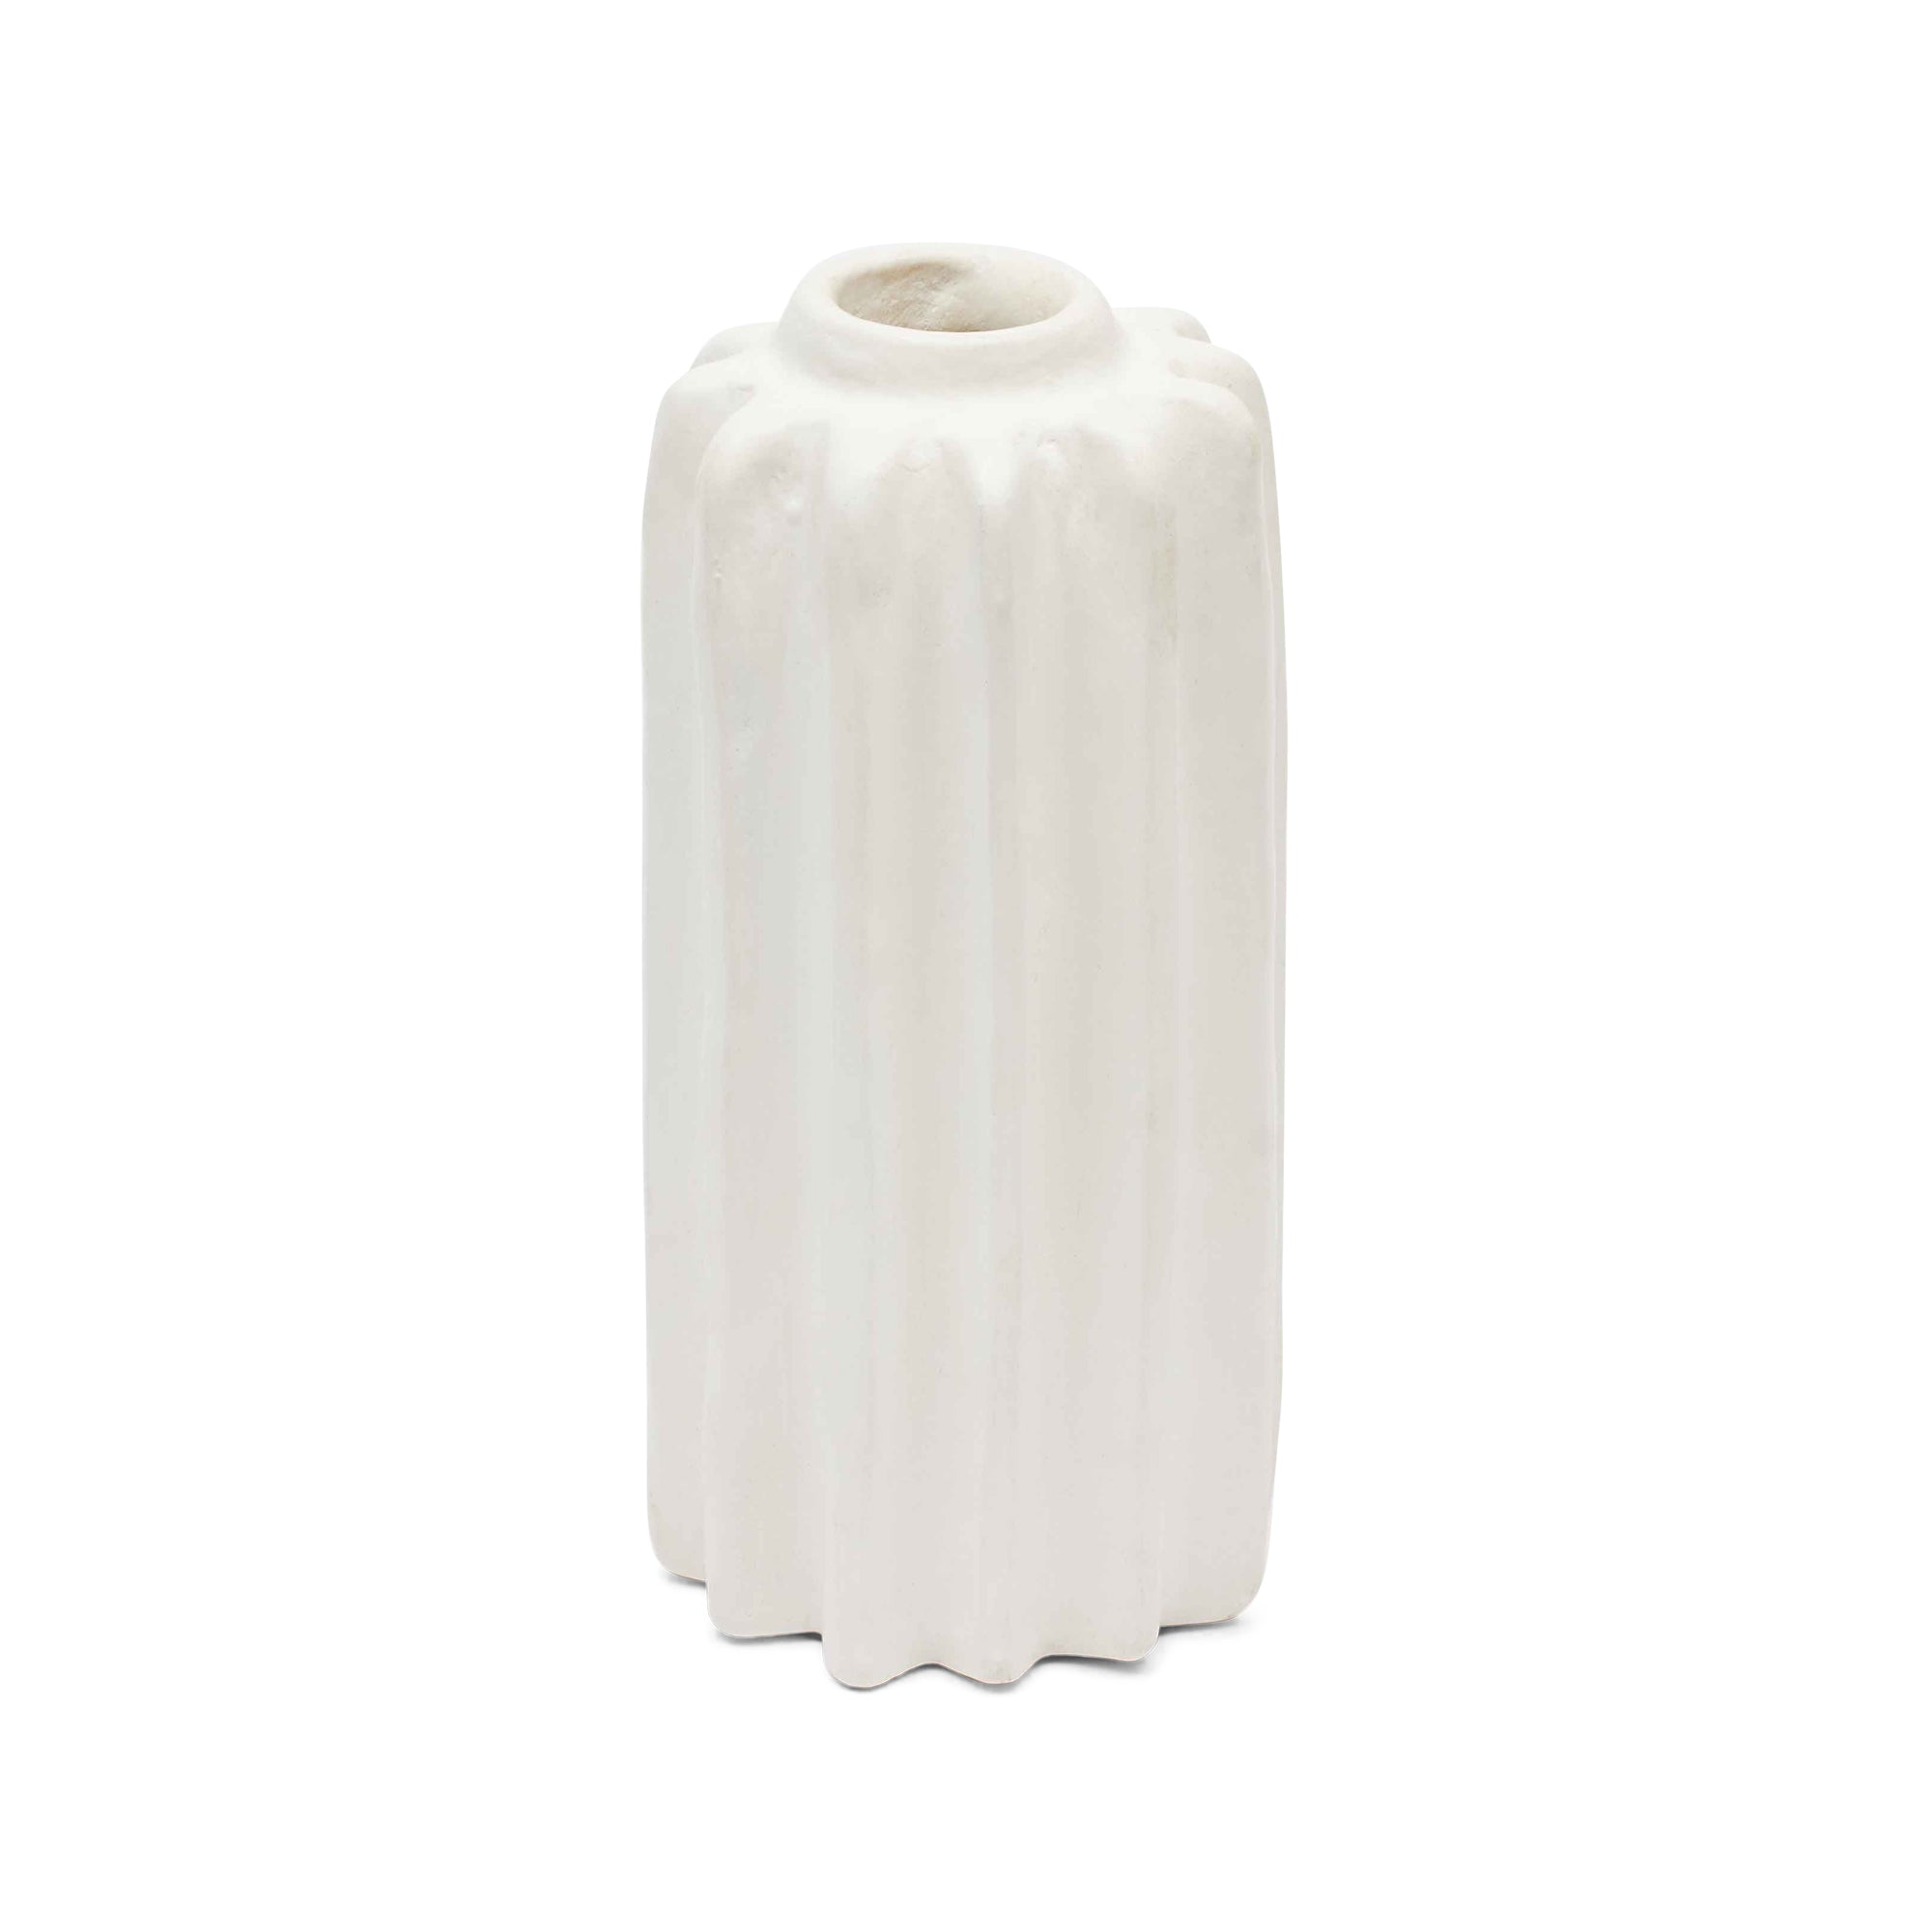 Ika Vase Small White